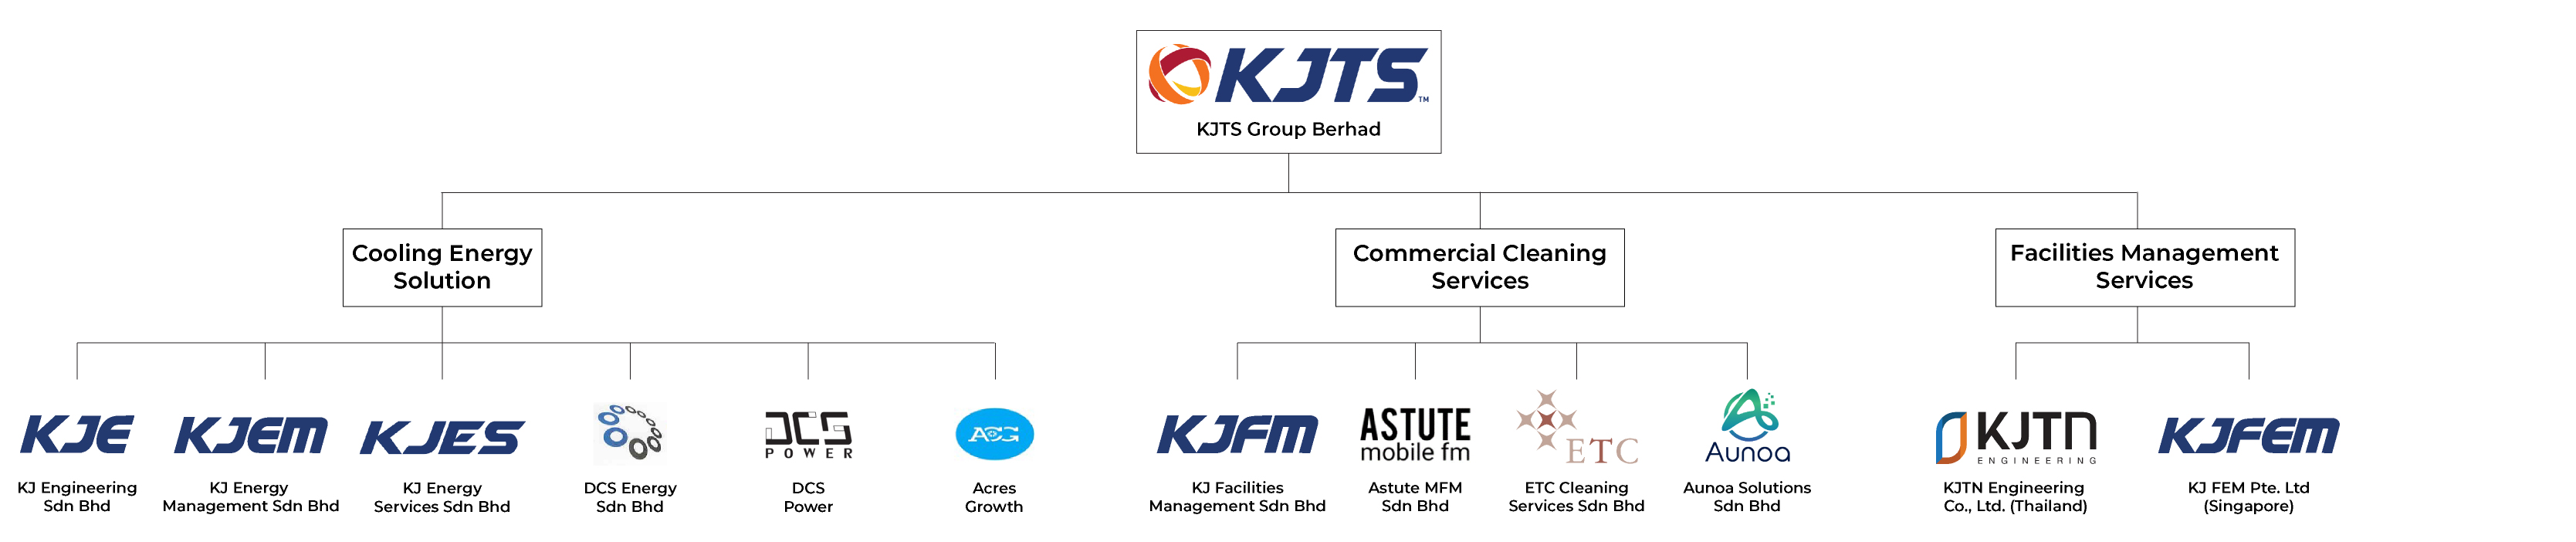 KJTS Group of Companies